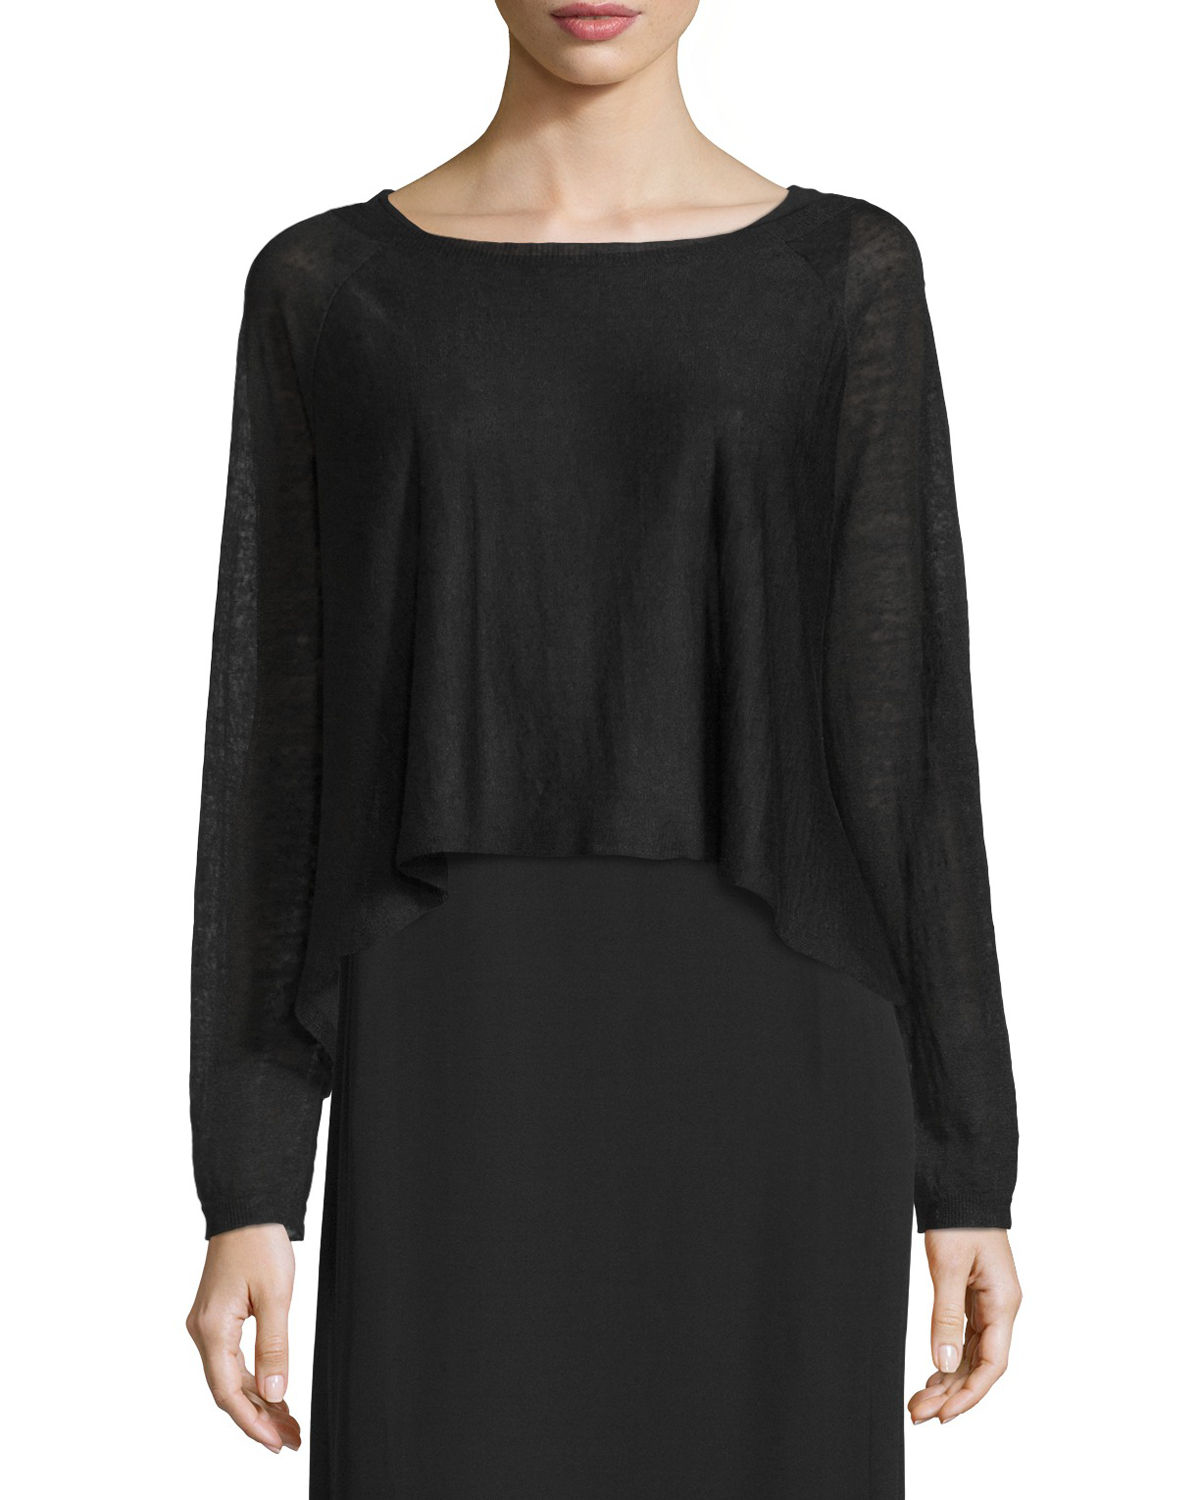 Lyst - Eileen Fisher Long-sleeve Organic Linen Short Top in Black